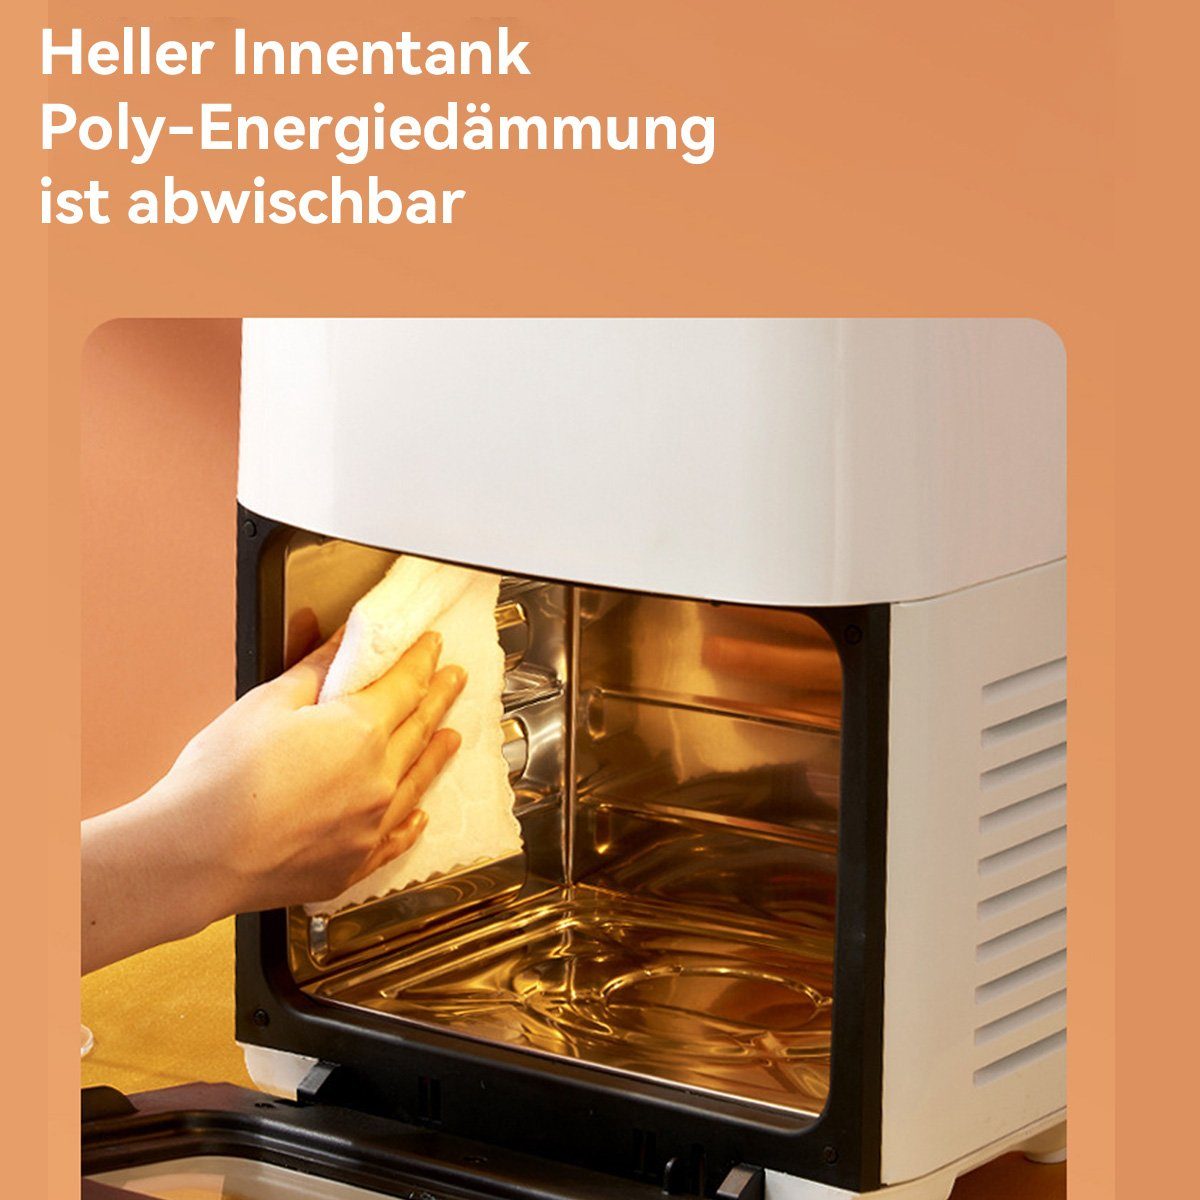 DOPWii Heißluftfritteuse Luftfritteuse,15L Air fryer Schwarz W Fritteuse,Heißluft-ofen,Edelstahl,1400W, 1400,00